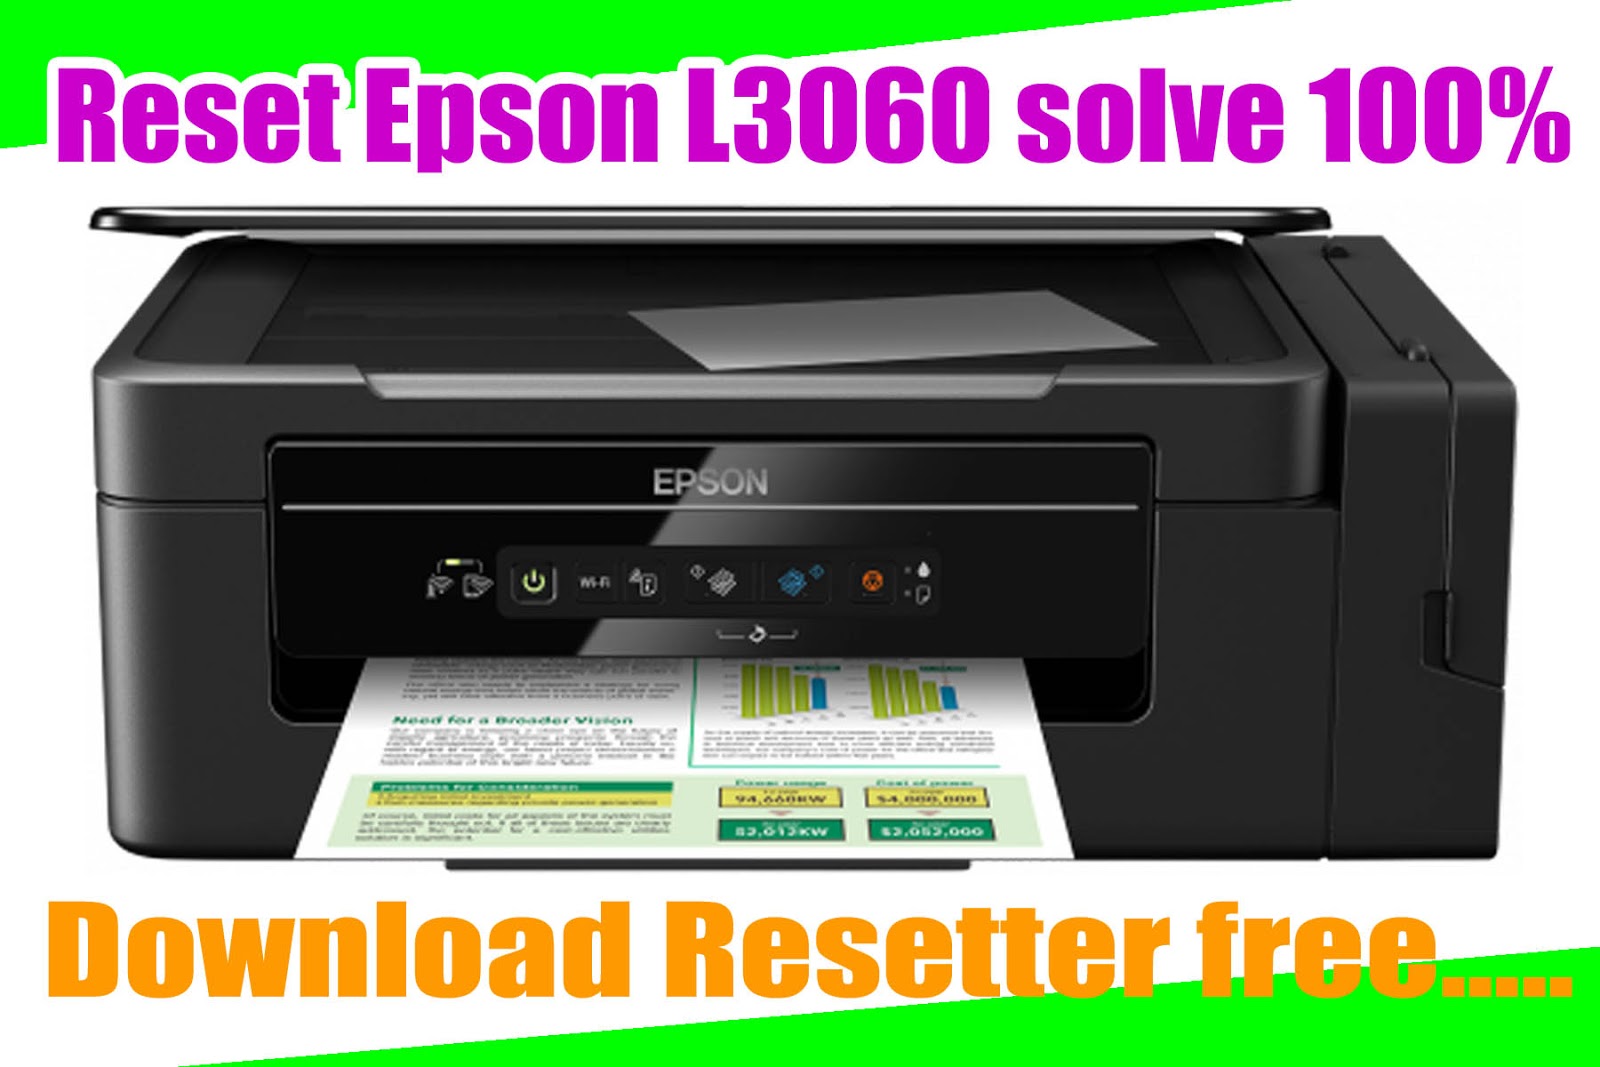 epson l3050 resetter and adjustment program